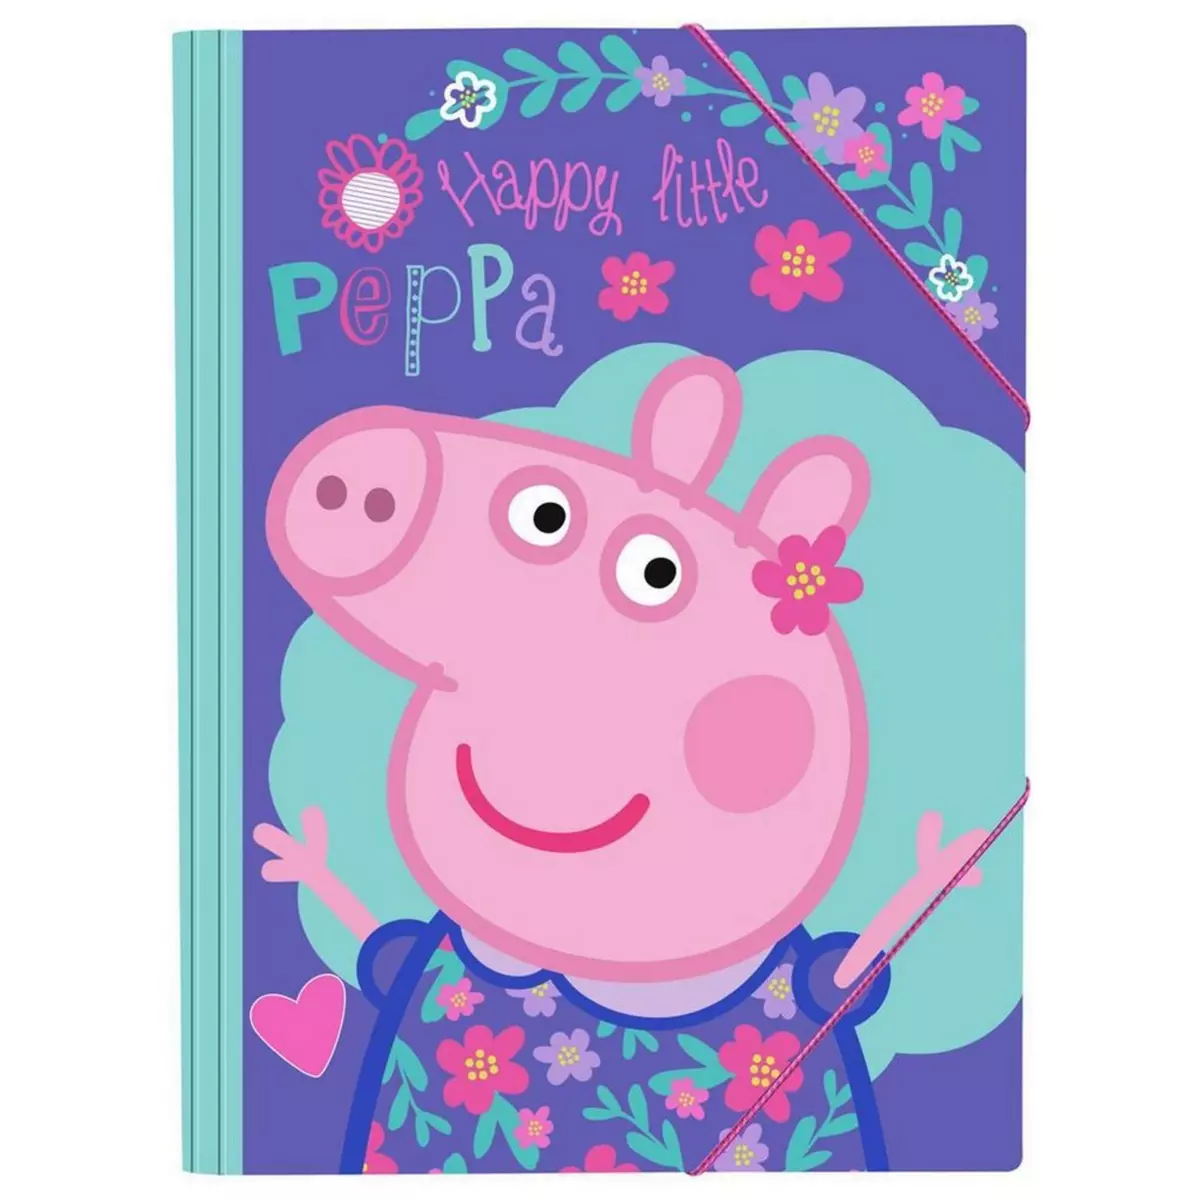  Pochette a rabat Peppa Pig Elastique Ecole Chemise A4